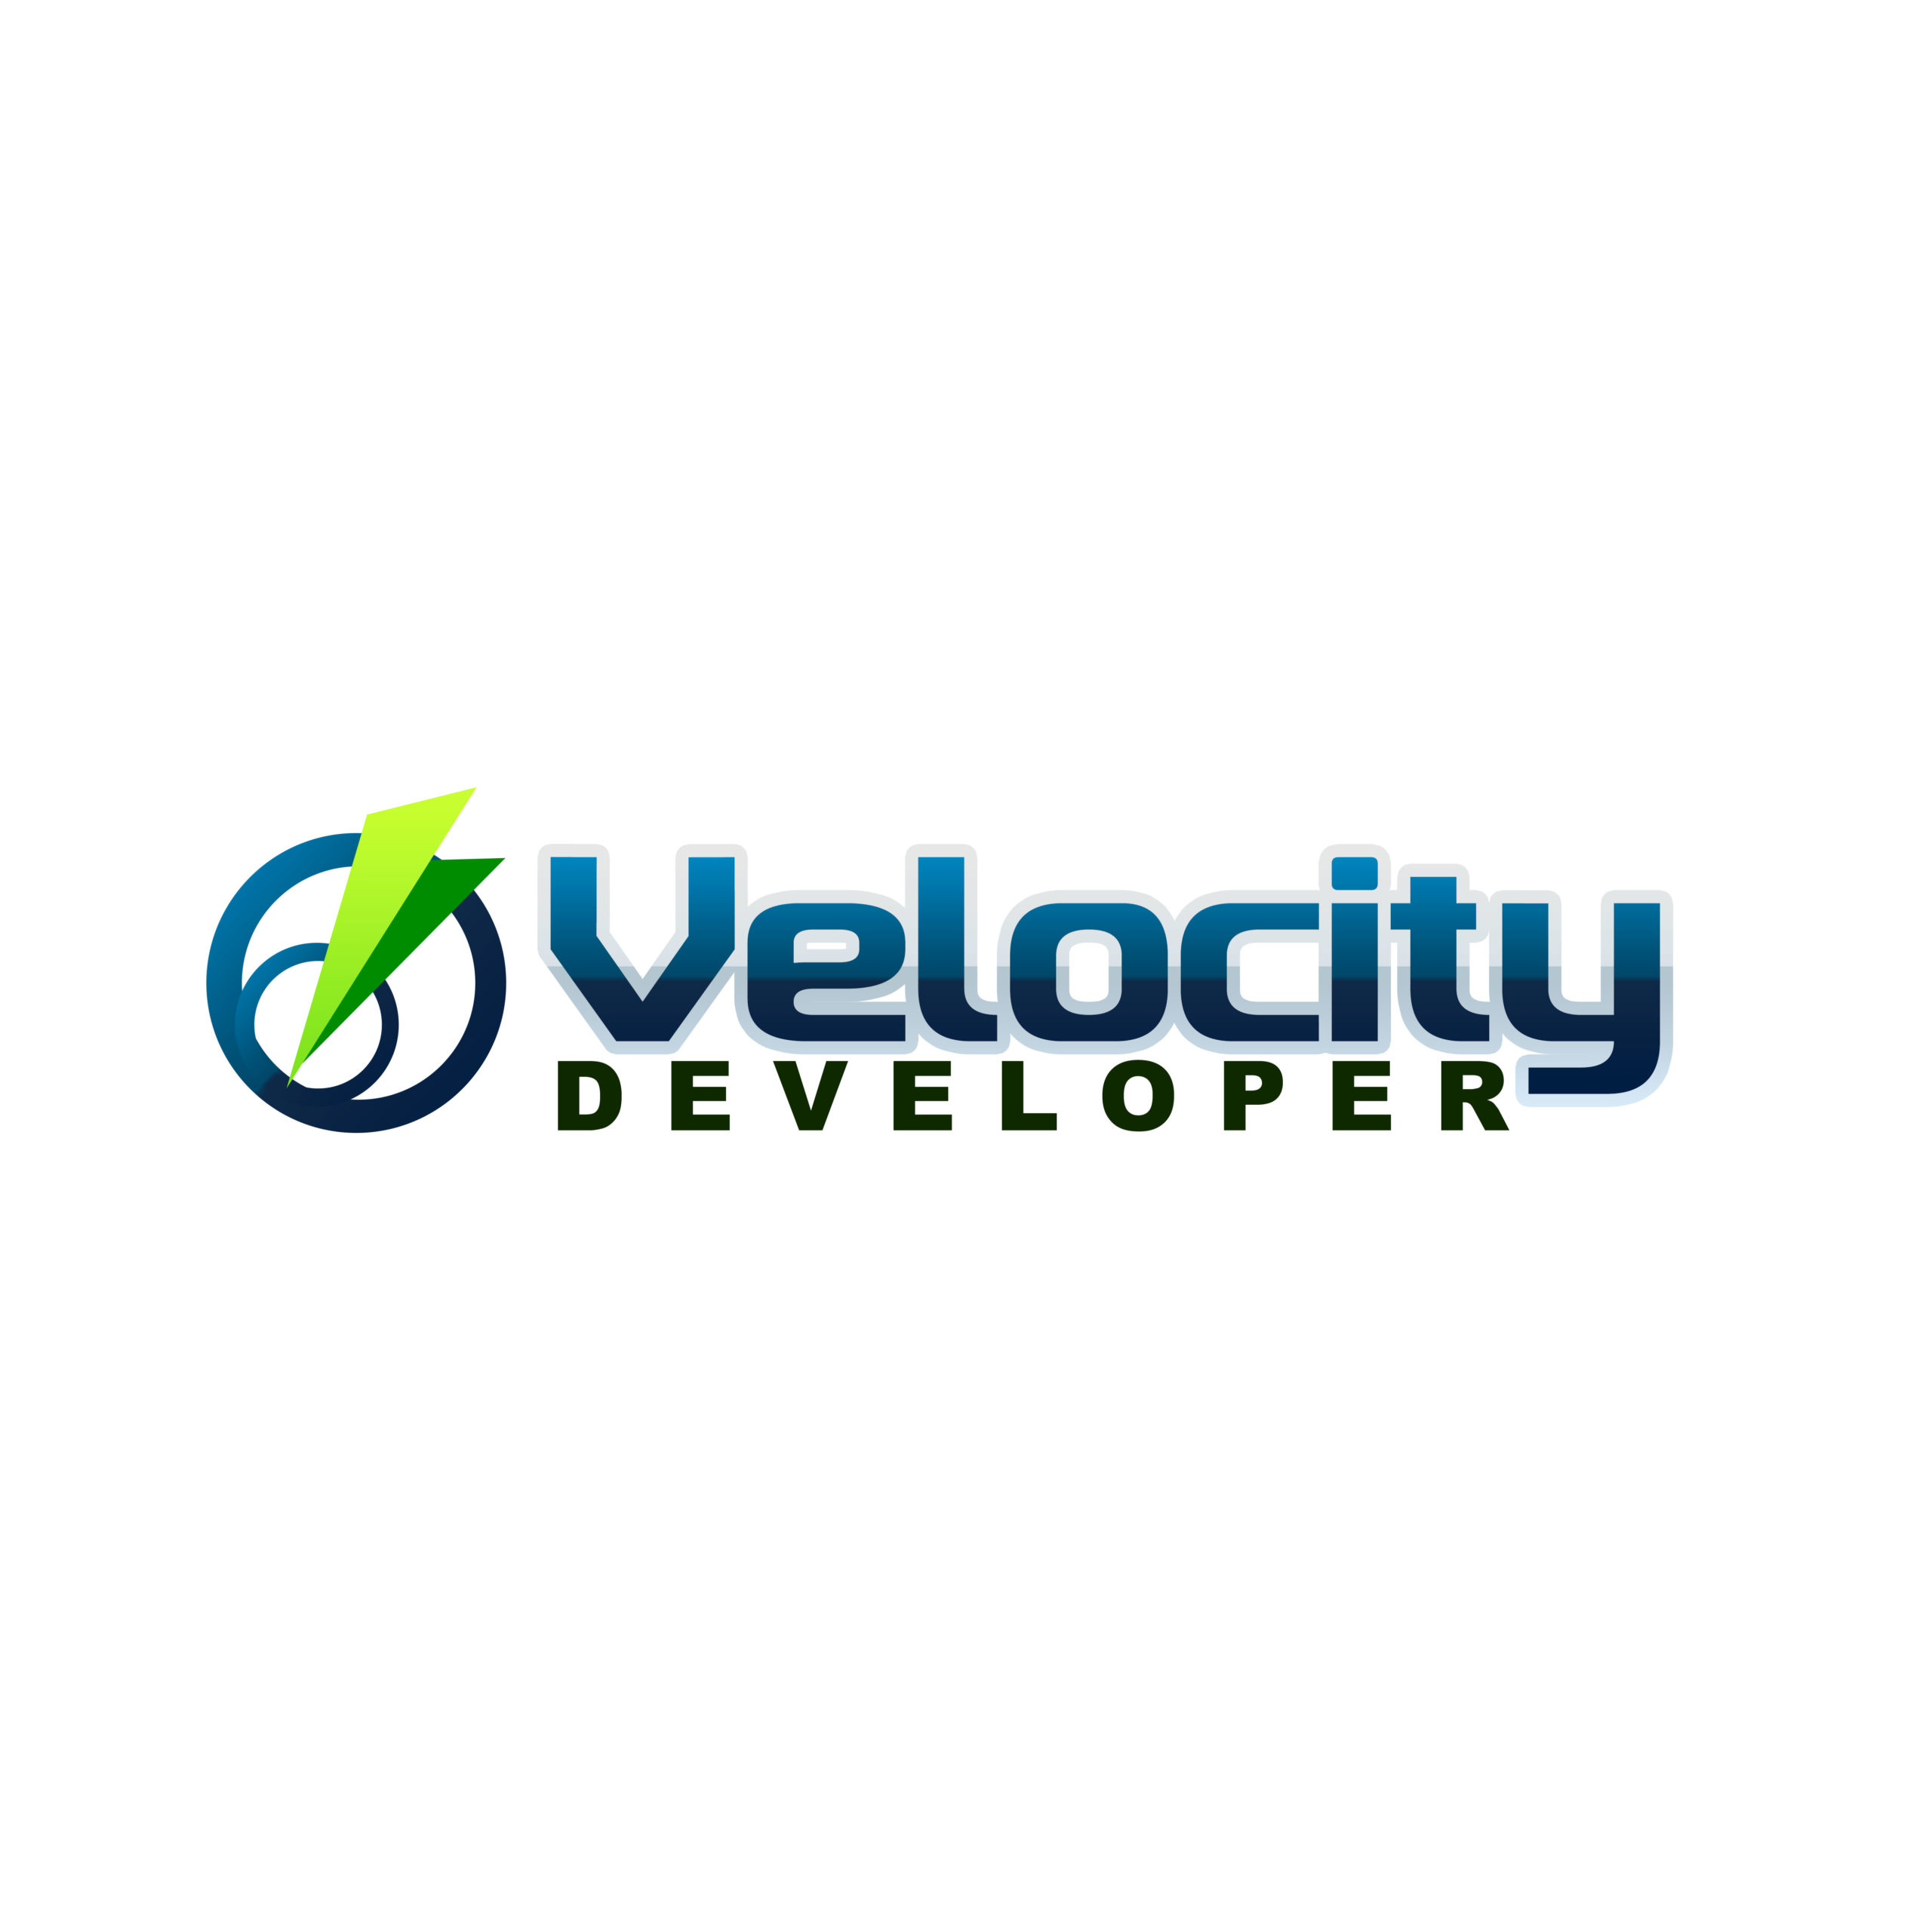 (c) Velocitydeveloper.com